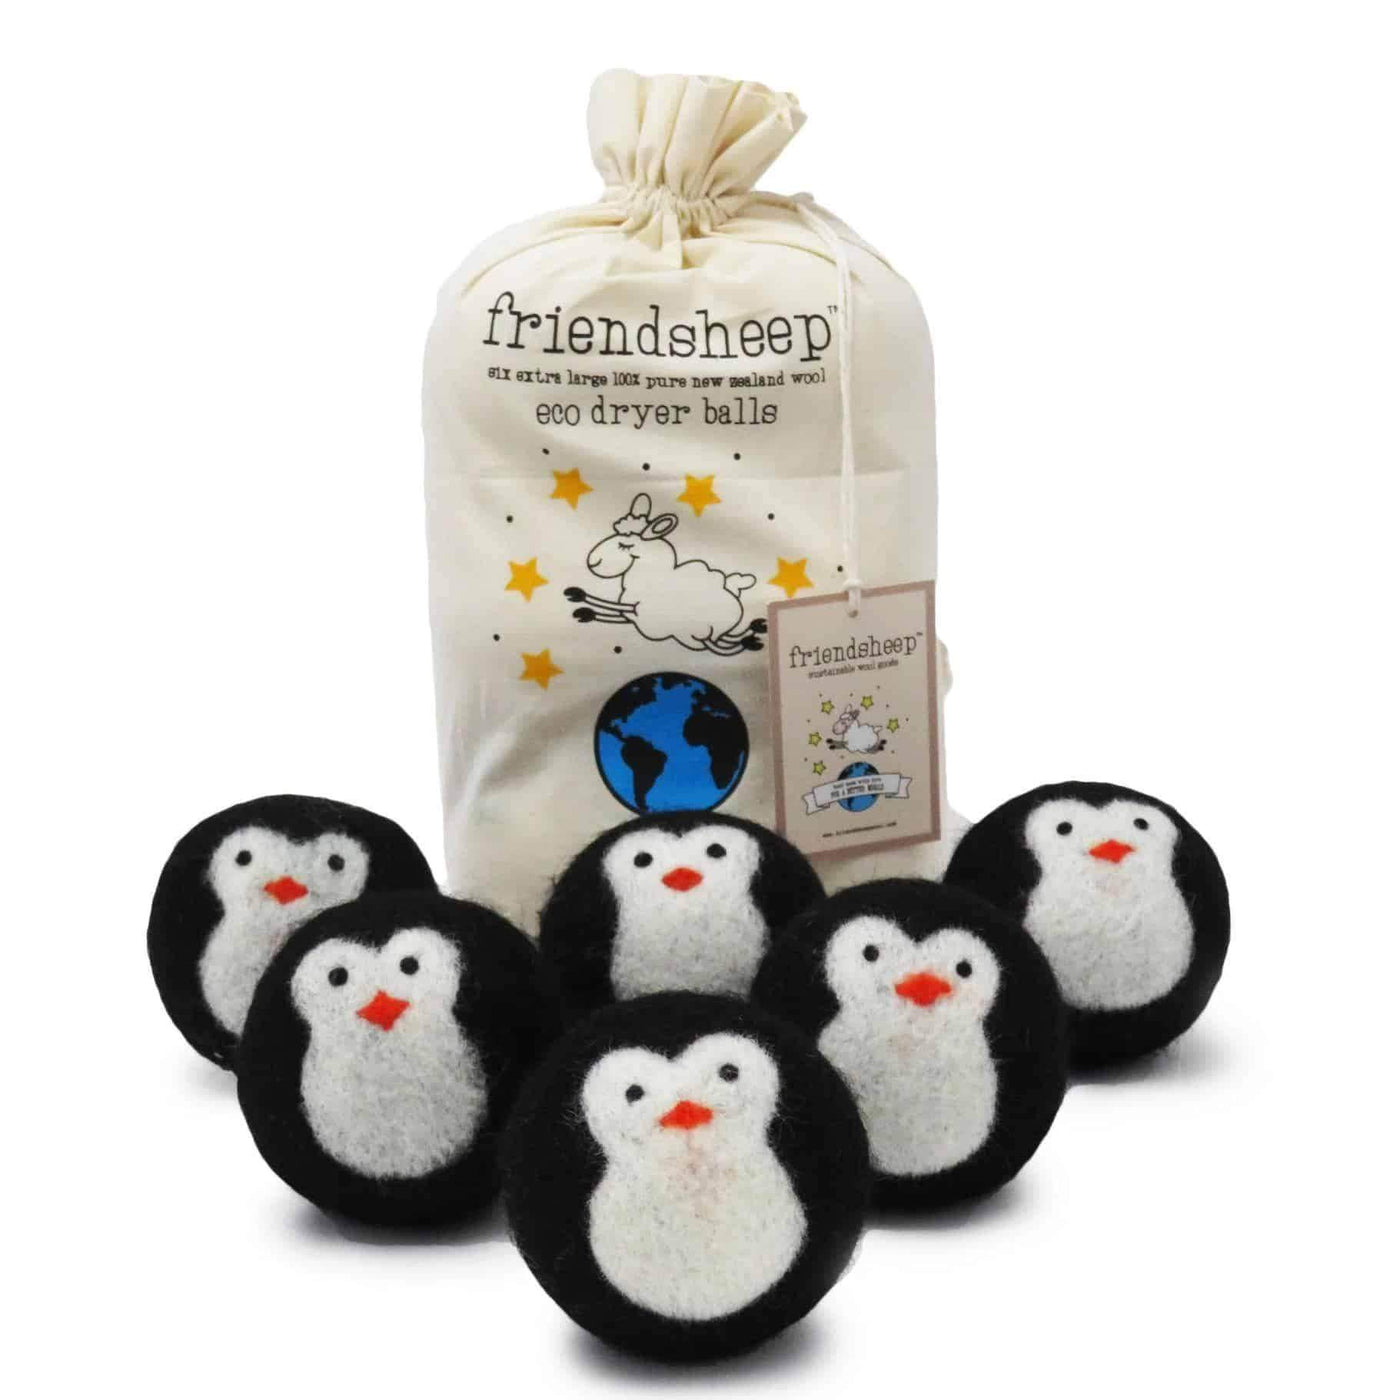 Cool Friends Penguin Eco Dryer Balls by Friendsheep